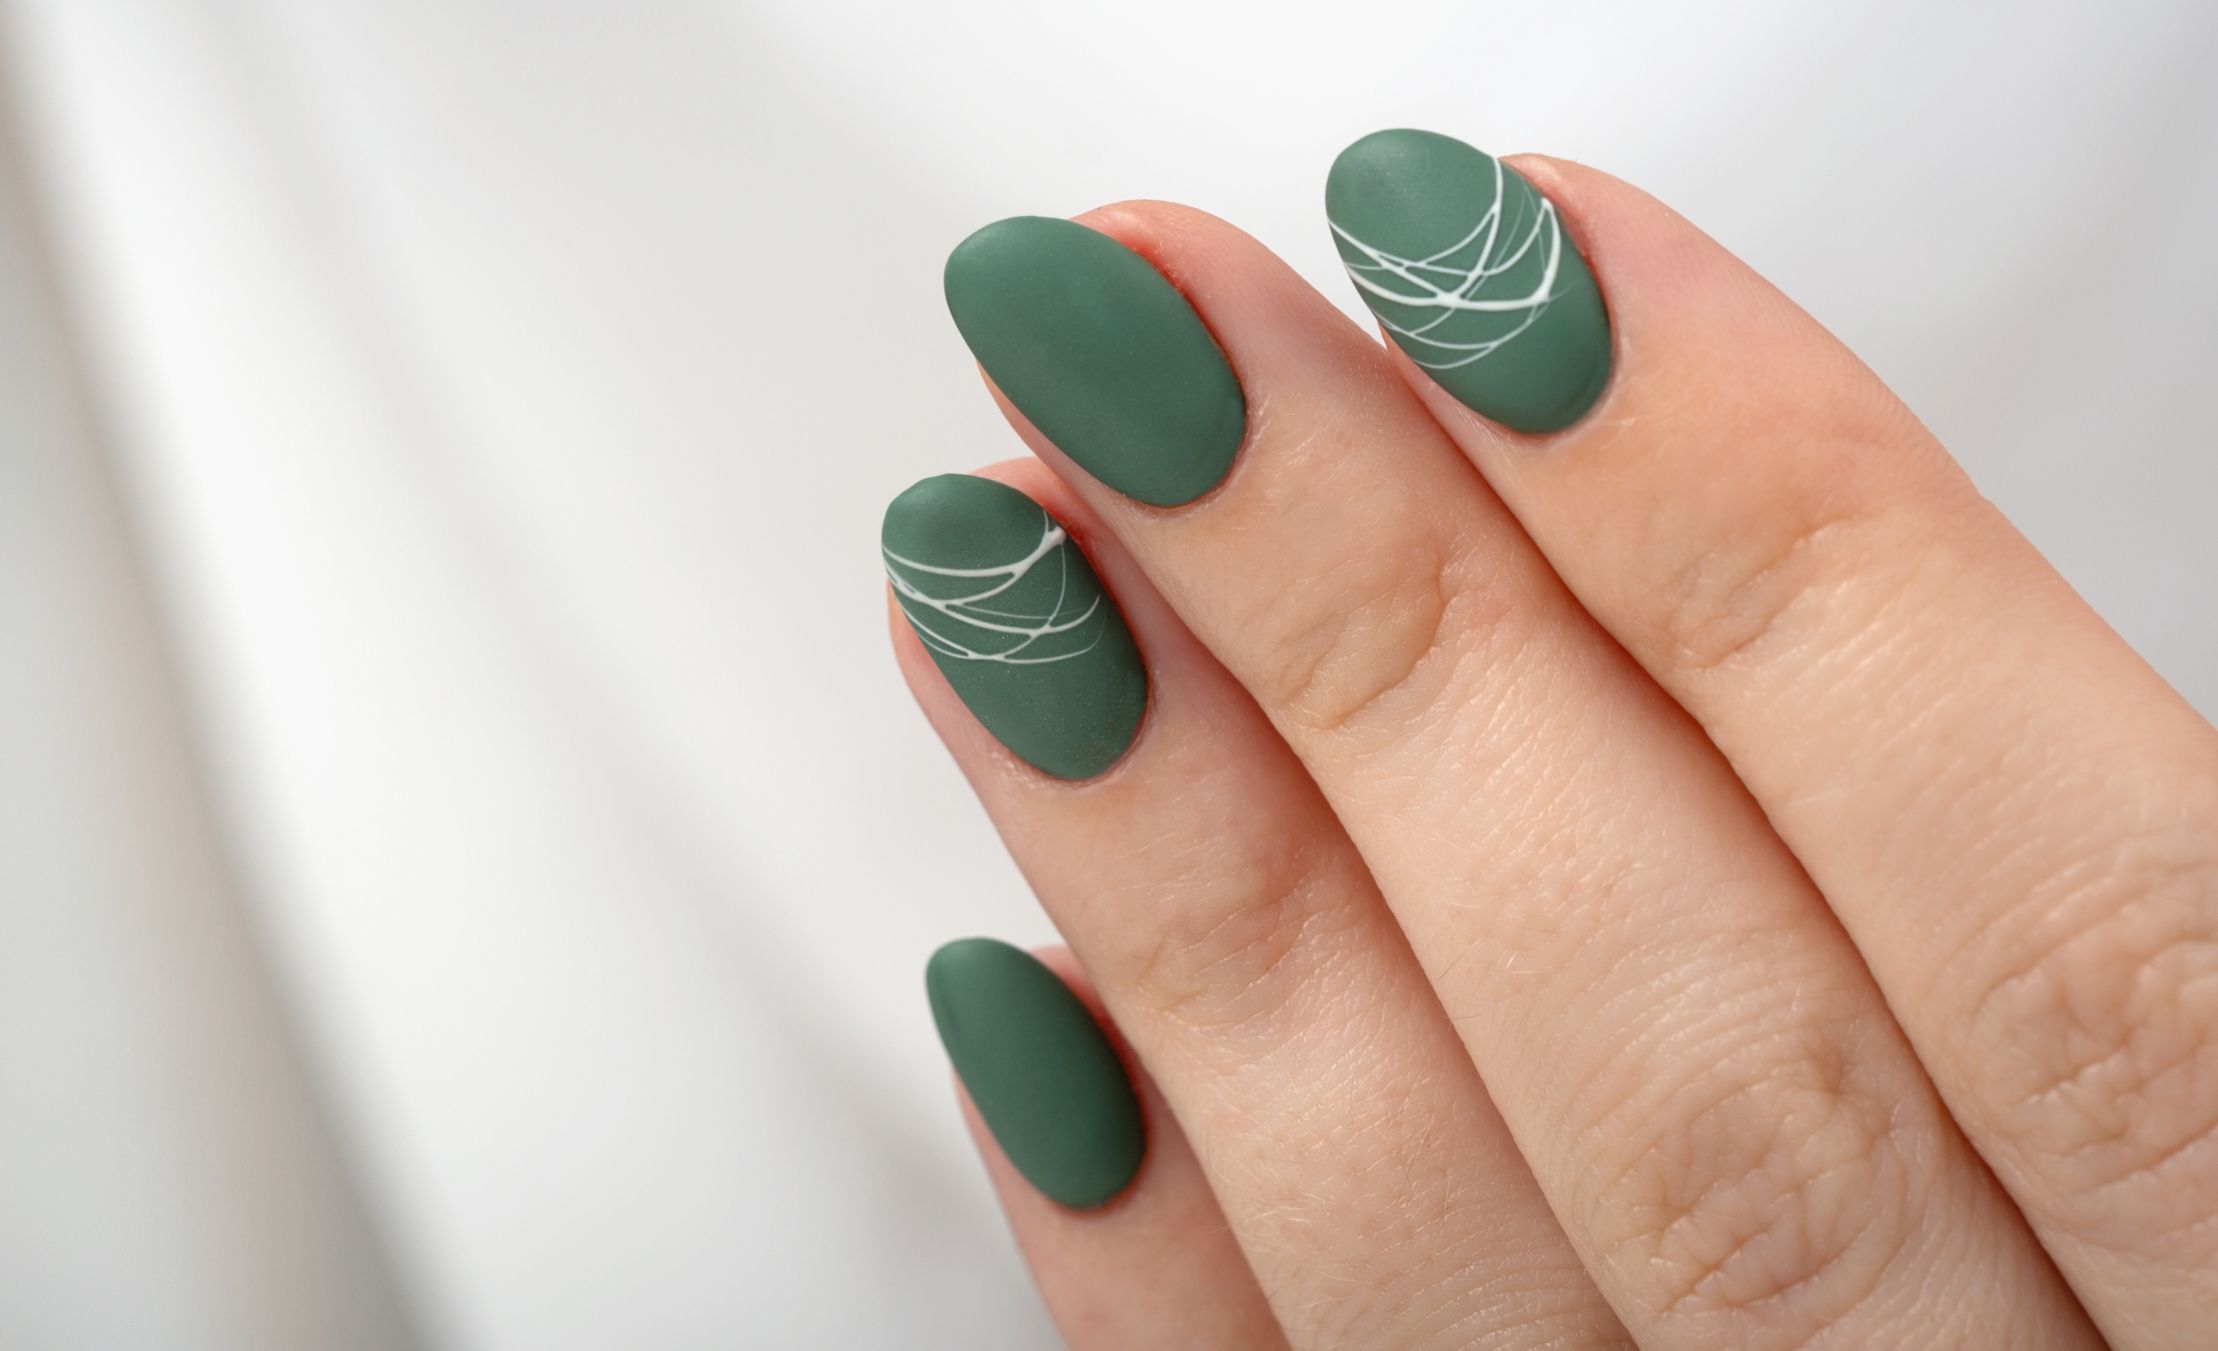 55 Green Nail Art Designs - nenuno creative